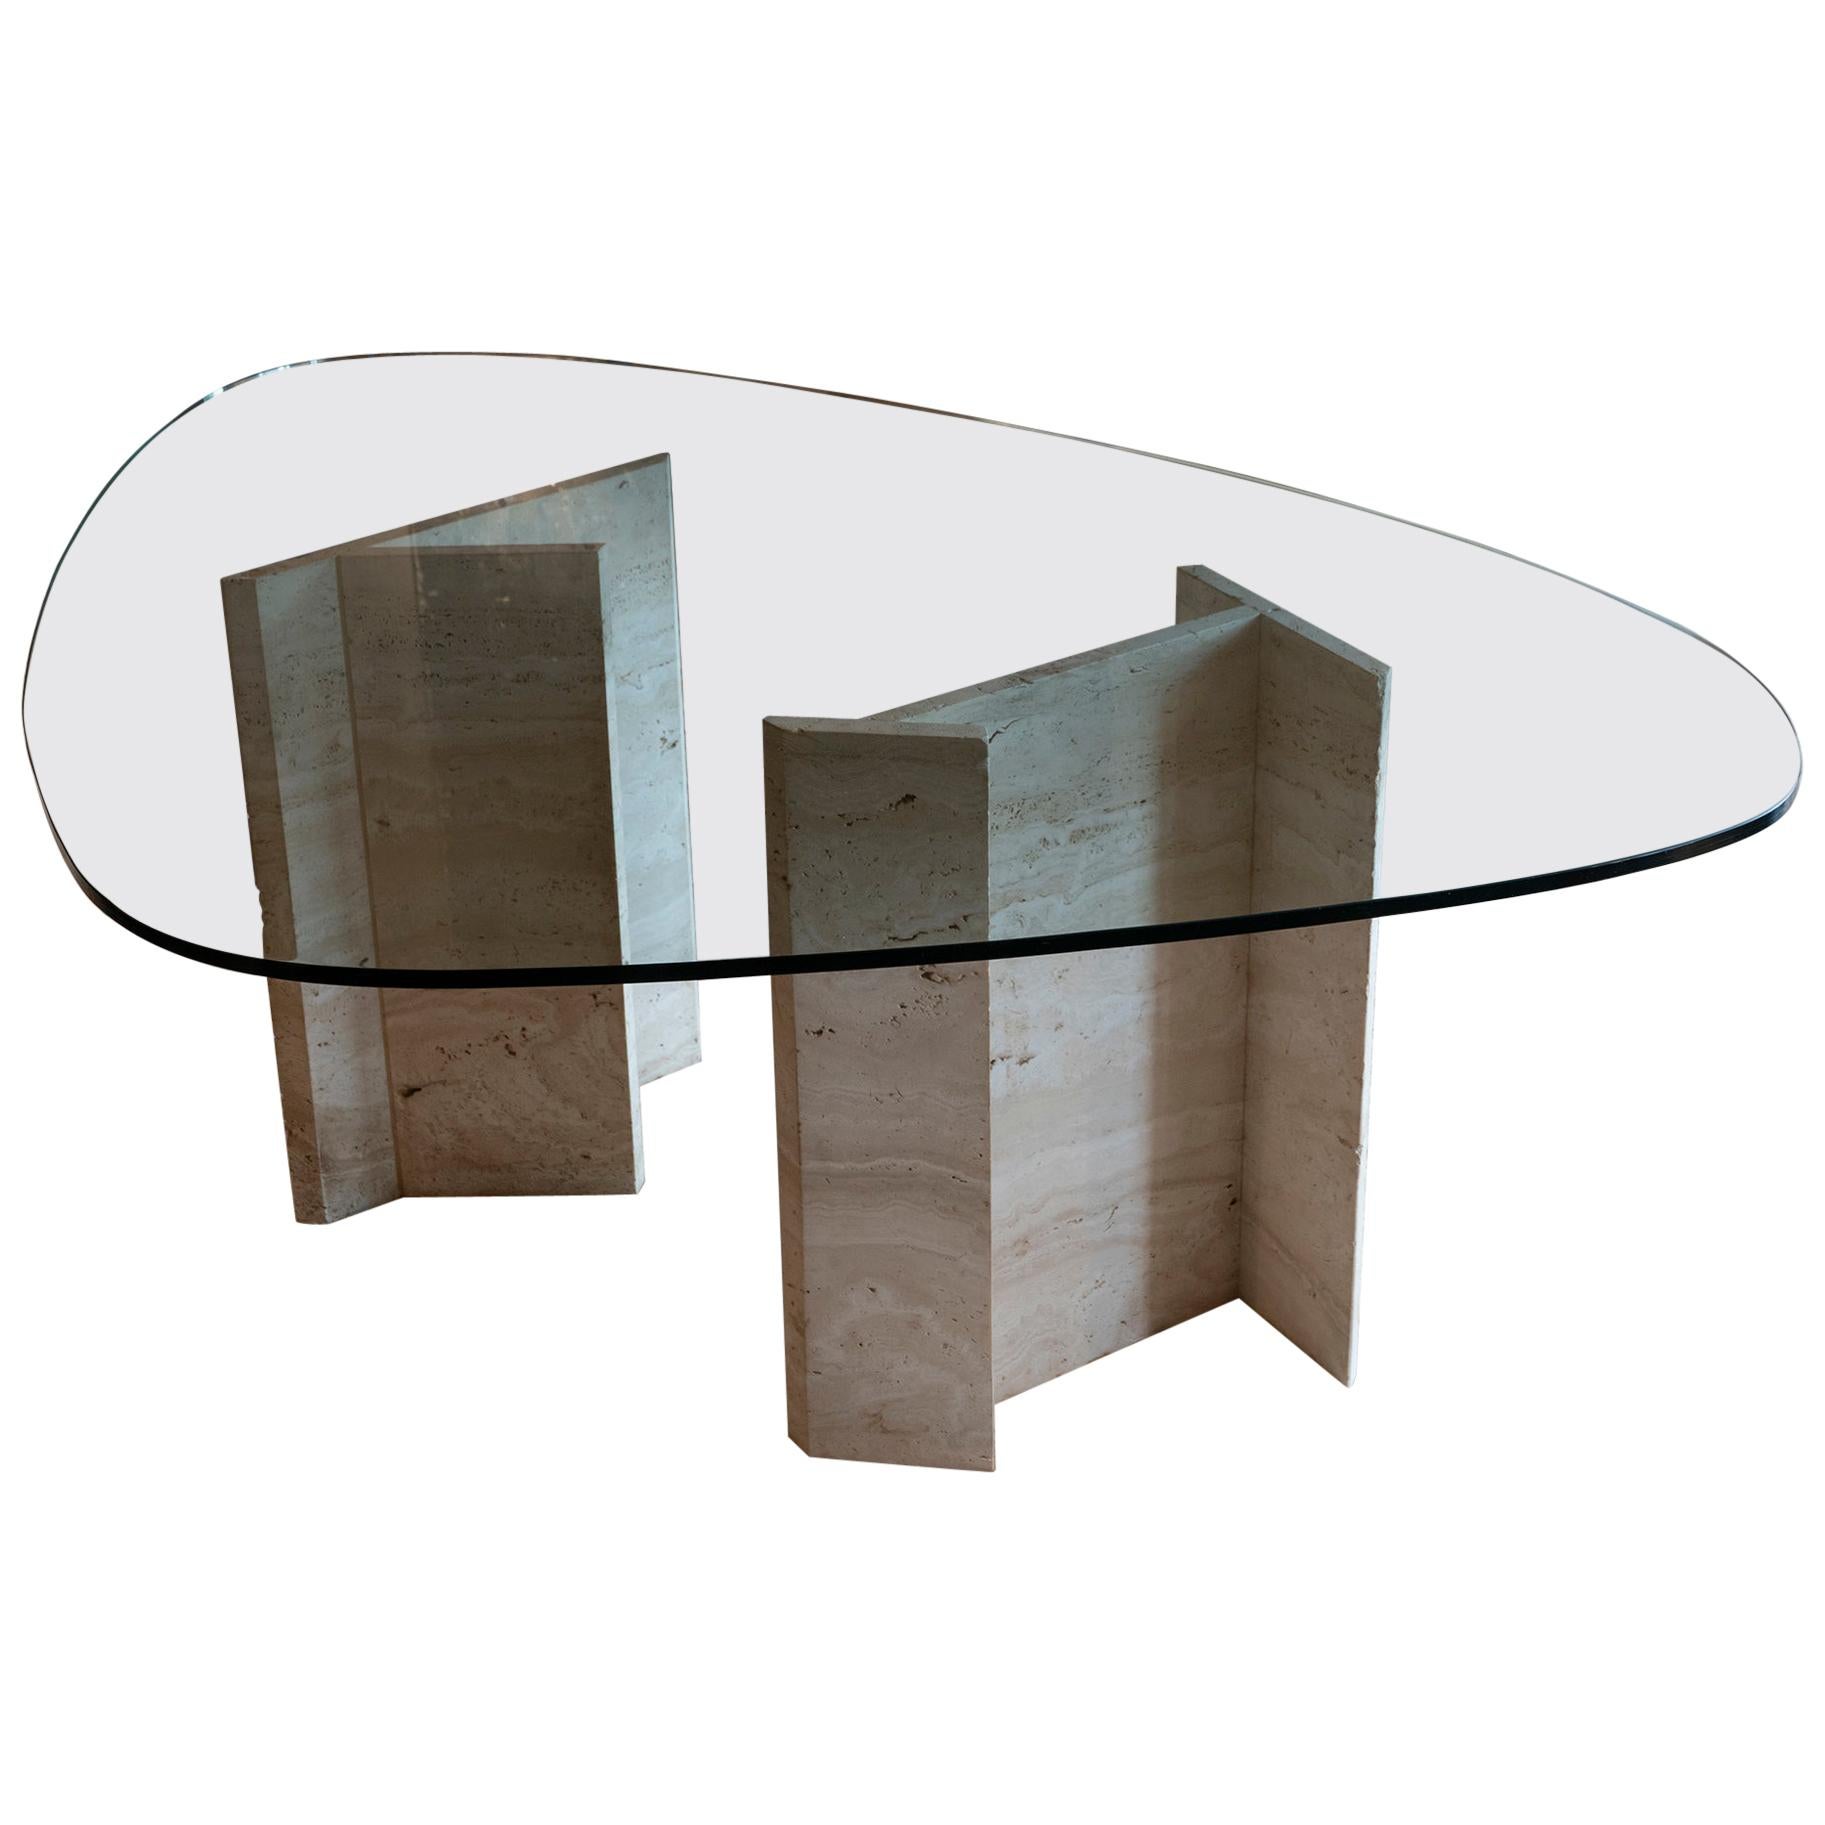 1970s Italian Travertine Center Table, Oval Shape Original Clear Glass Top